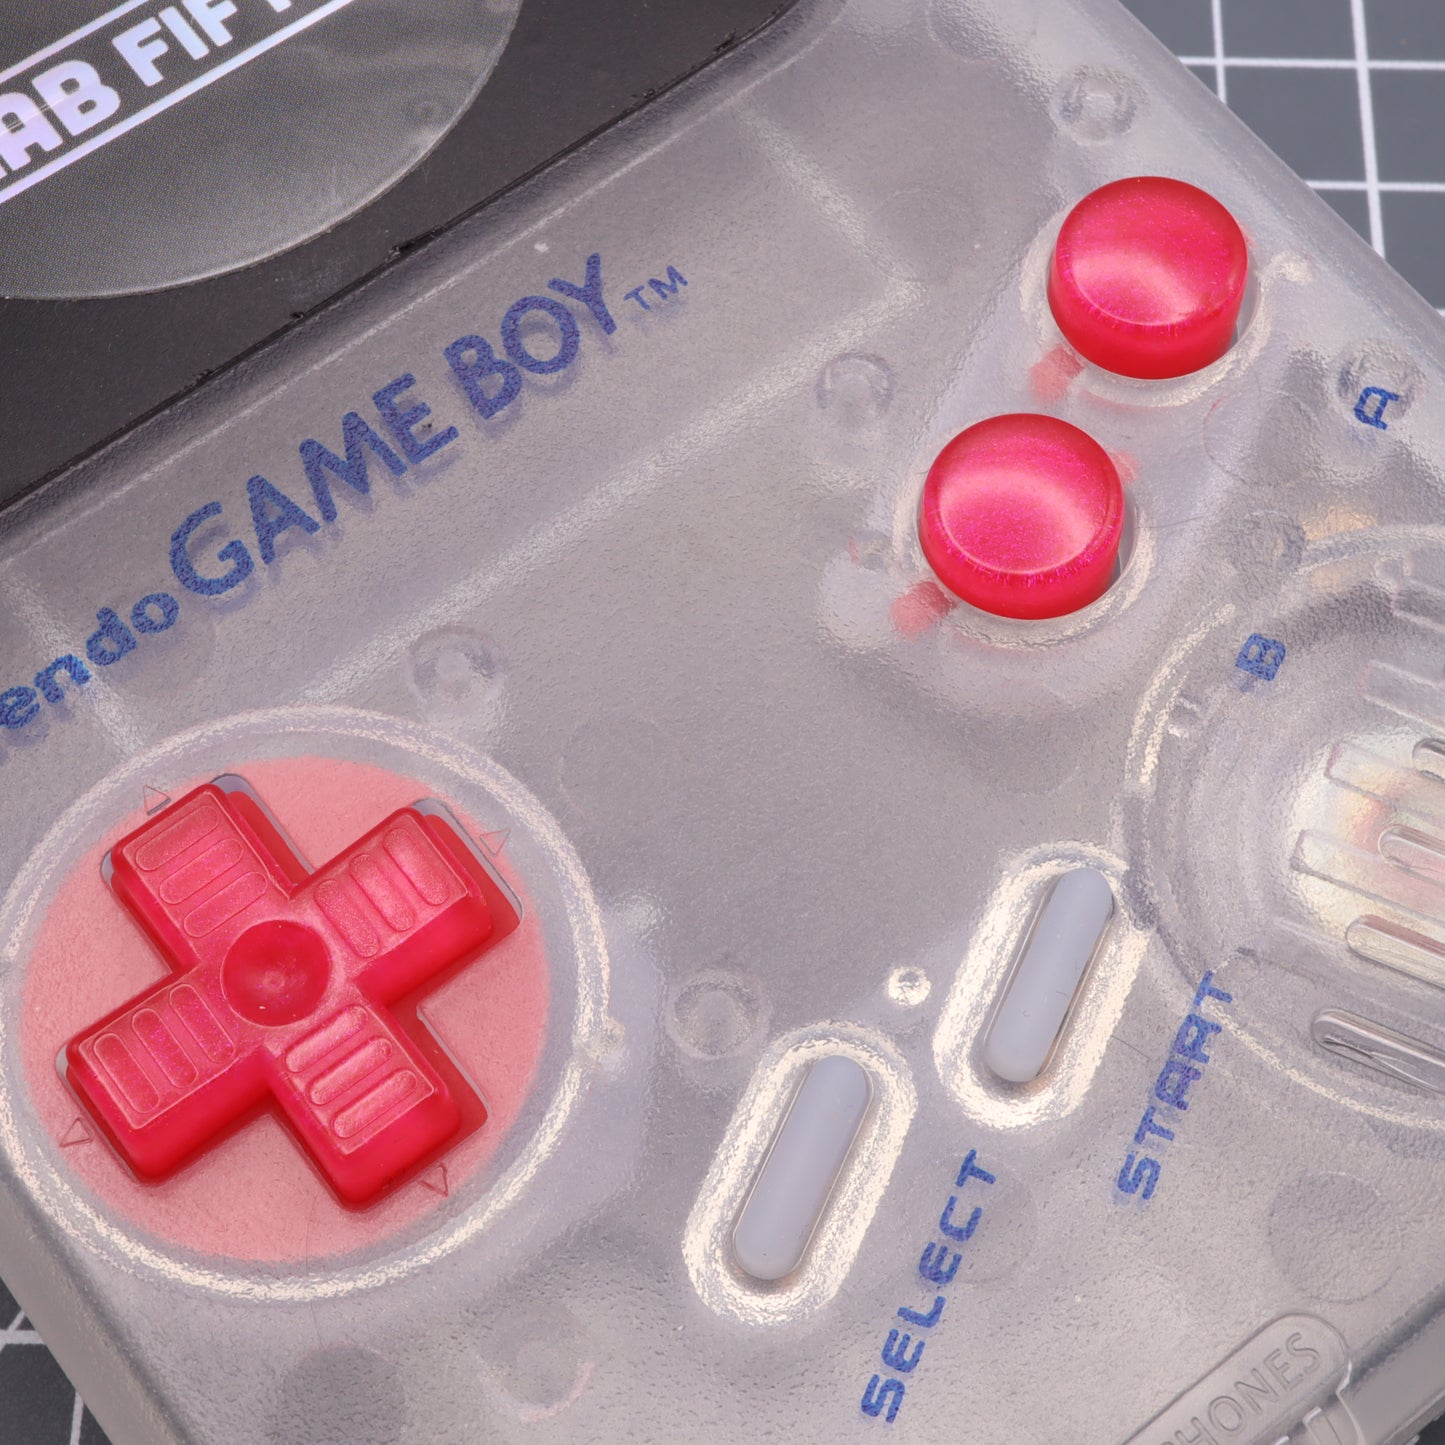 Game Boy DMG - Custom Button - Raspberry Candy